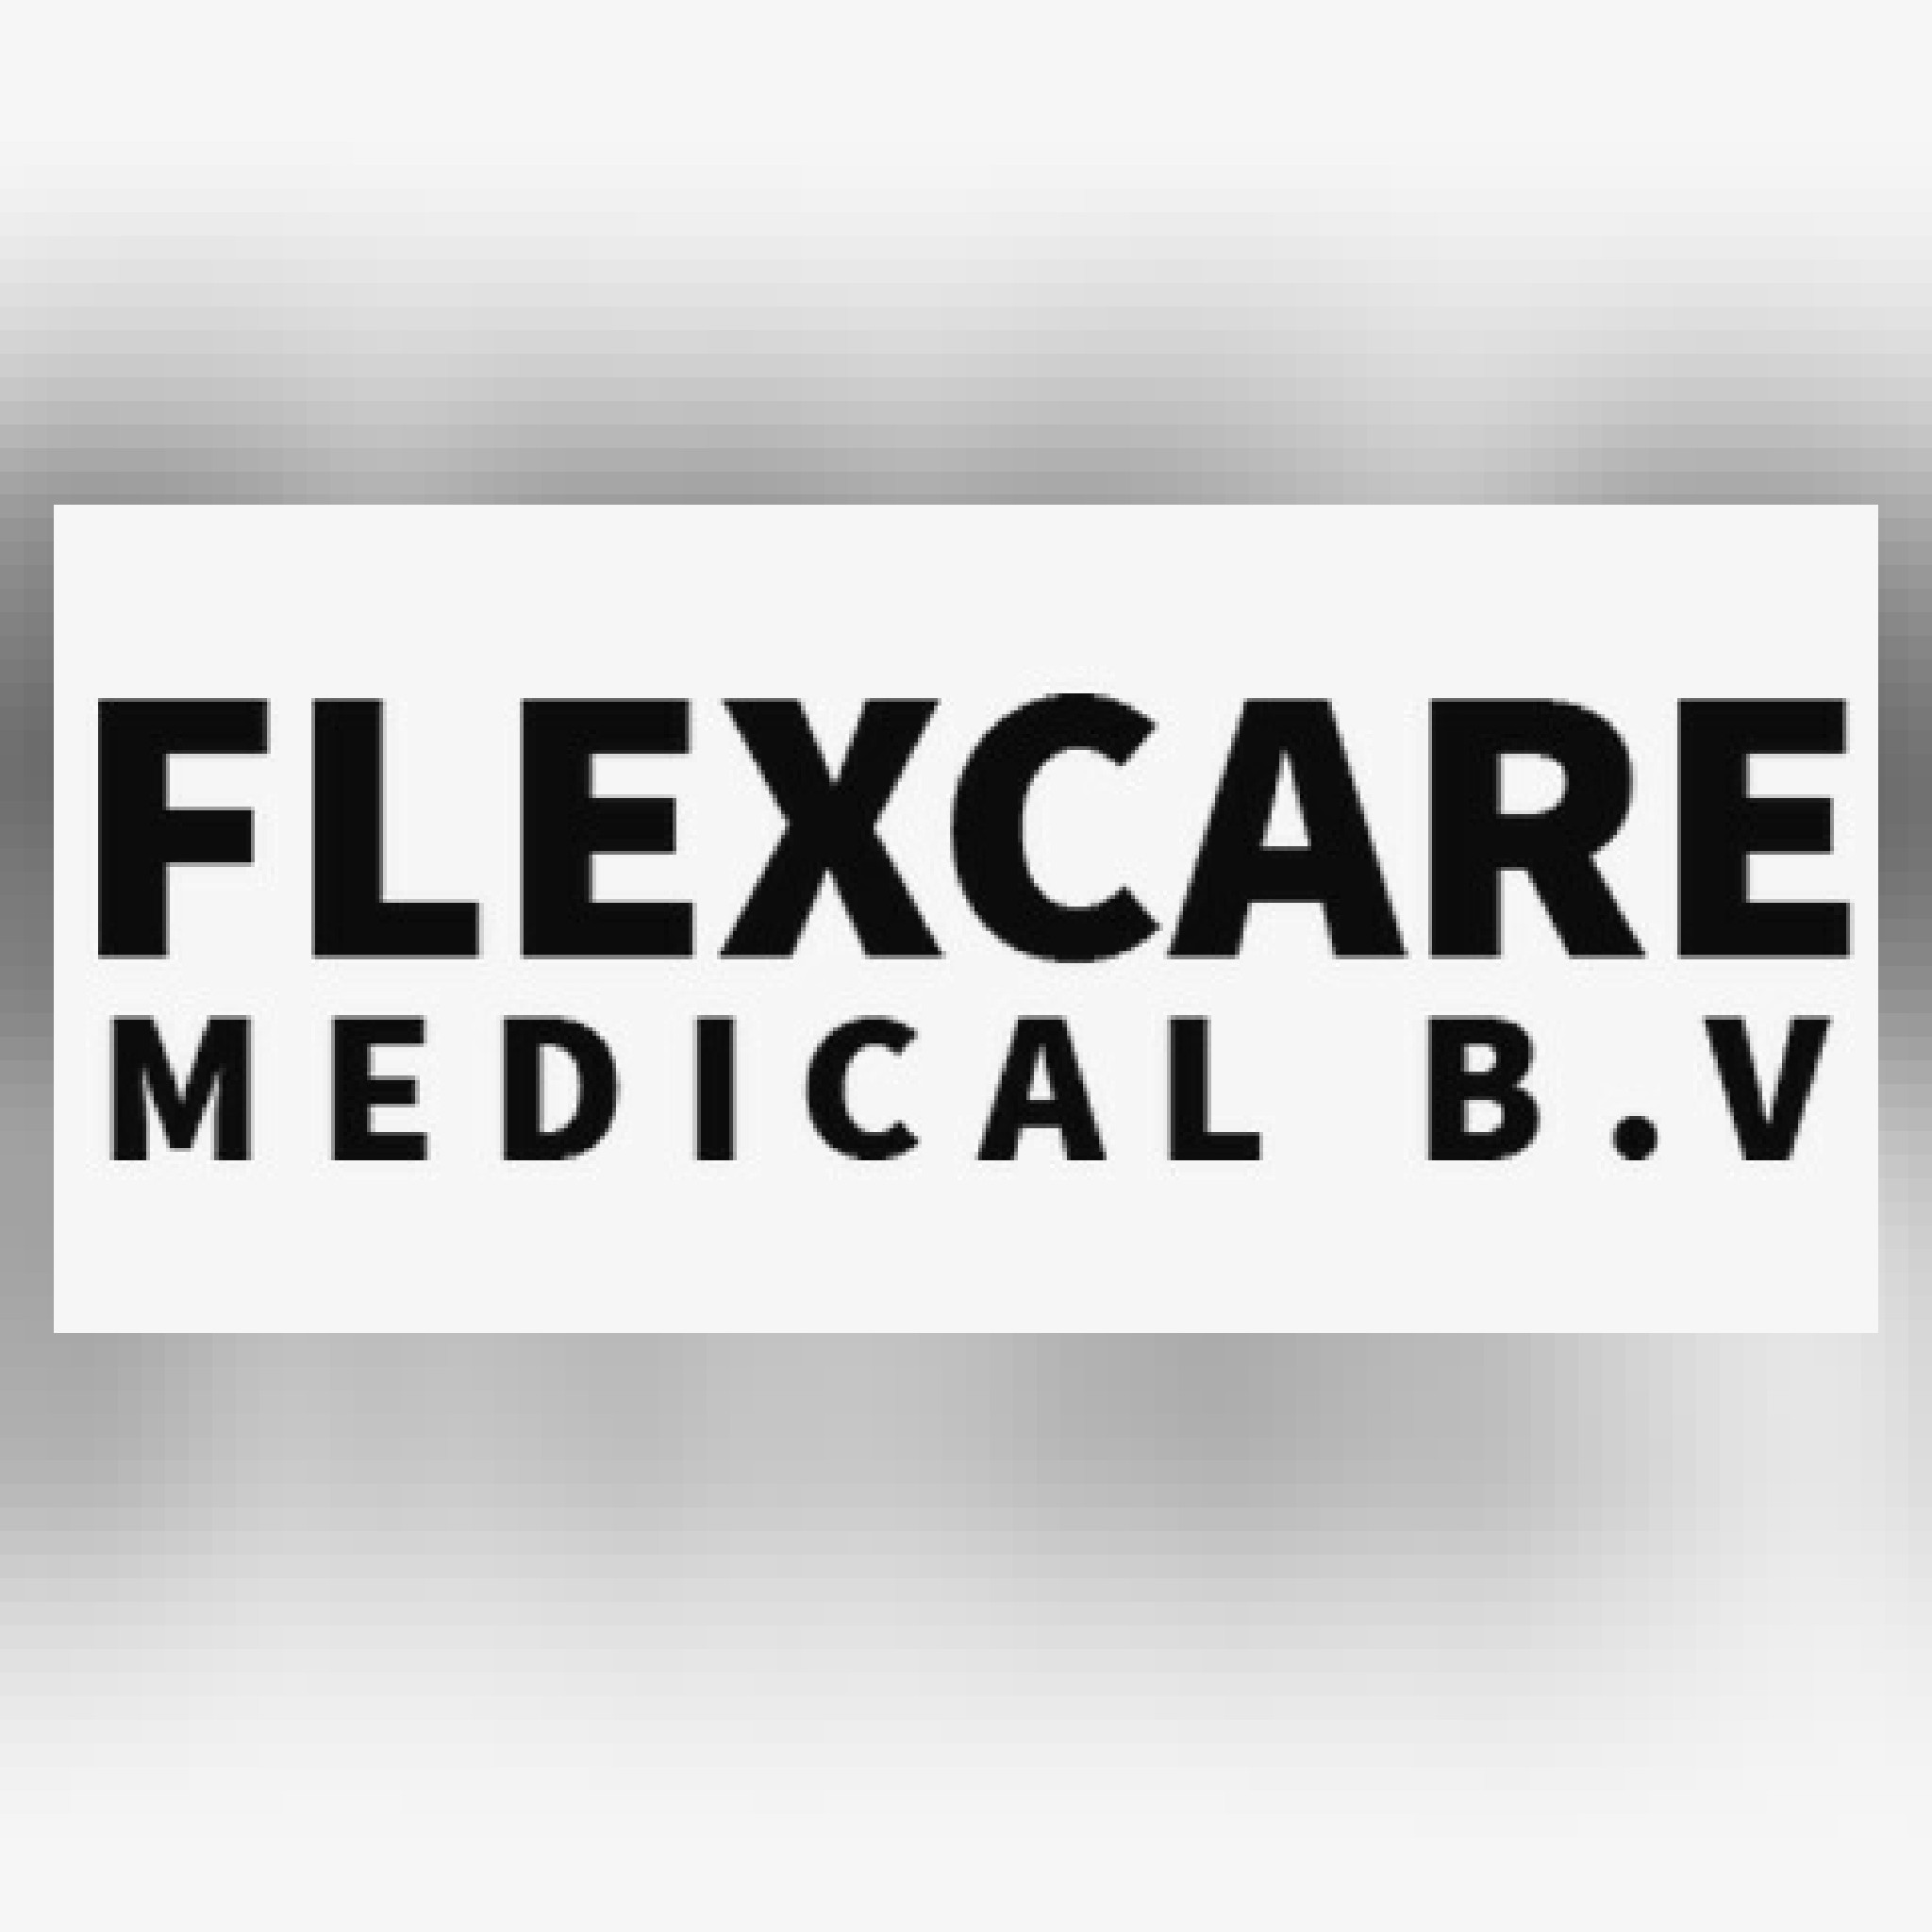 Flexcare Medical B.V logo